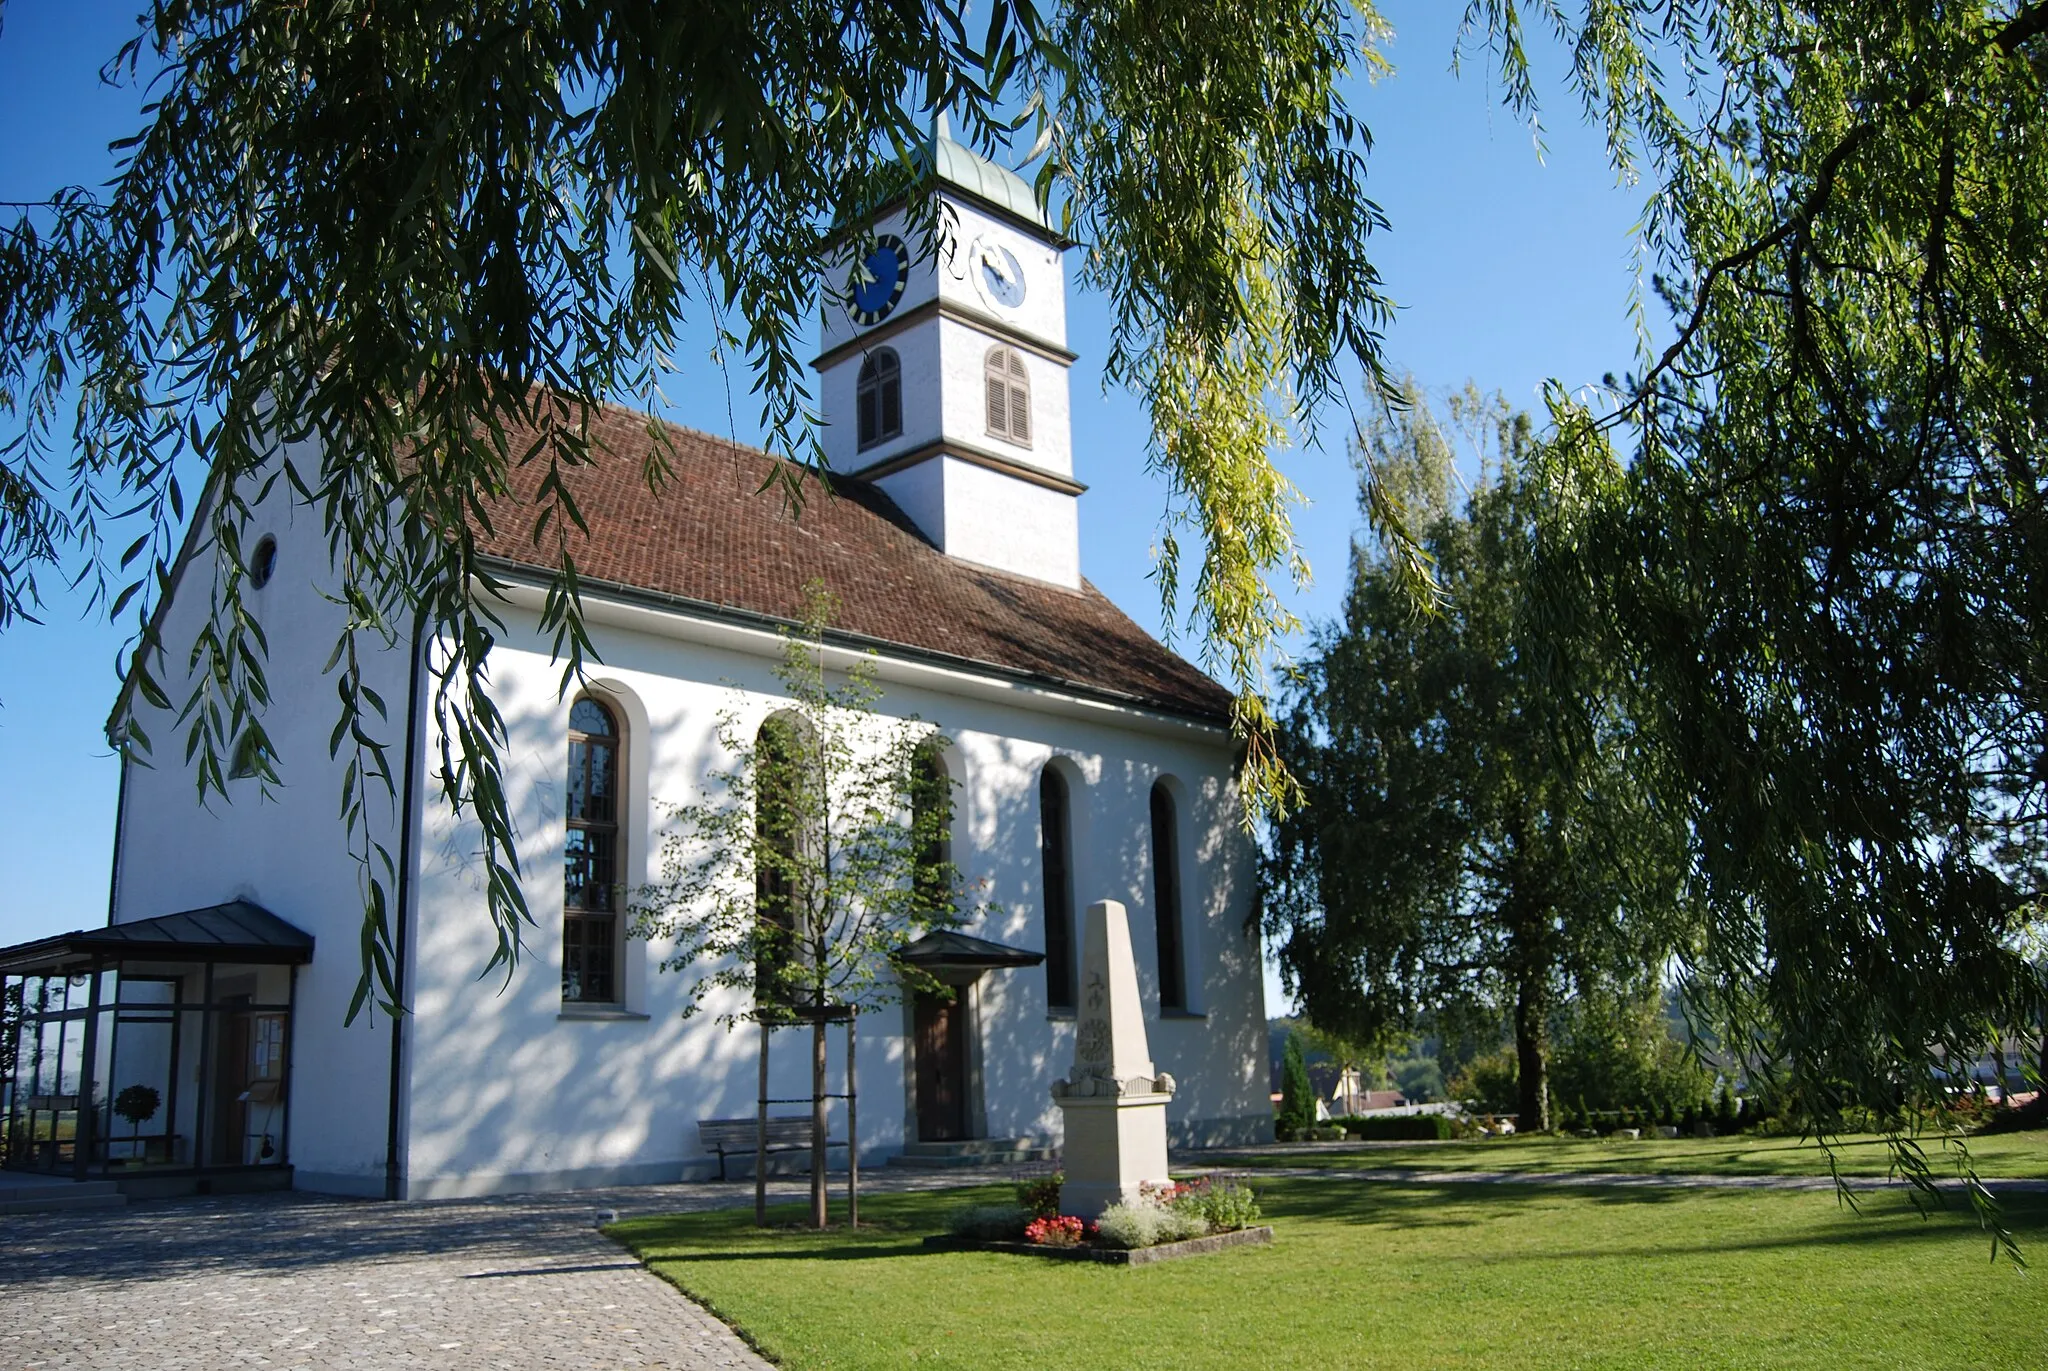 Photo showing: Church of Henggart, canton of Zürich, Switzerland